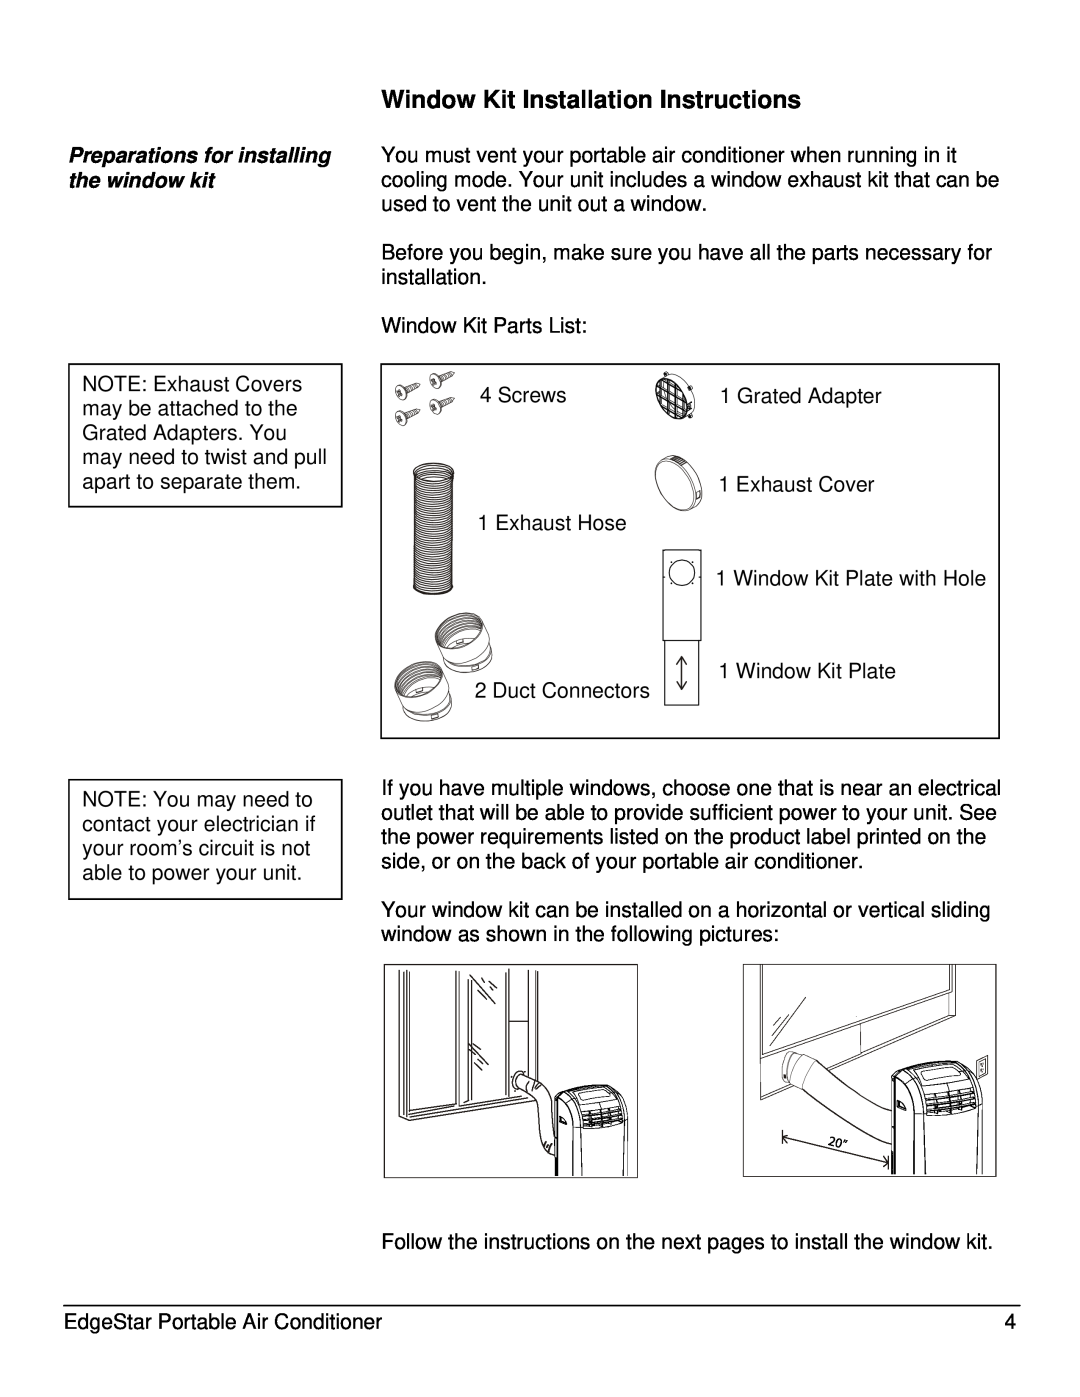 EdgeStar AP12000HS owner manual Window Kit Installation Instructions, Preparations for installing the window kit 